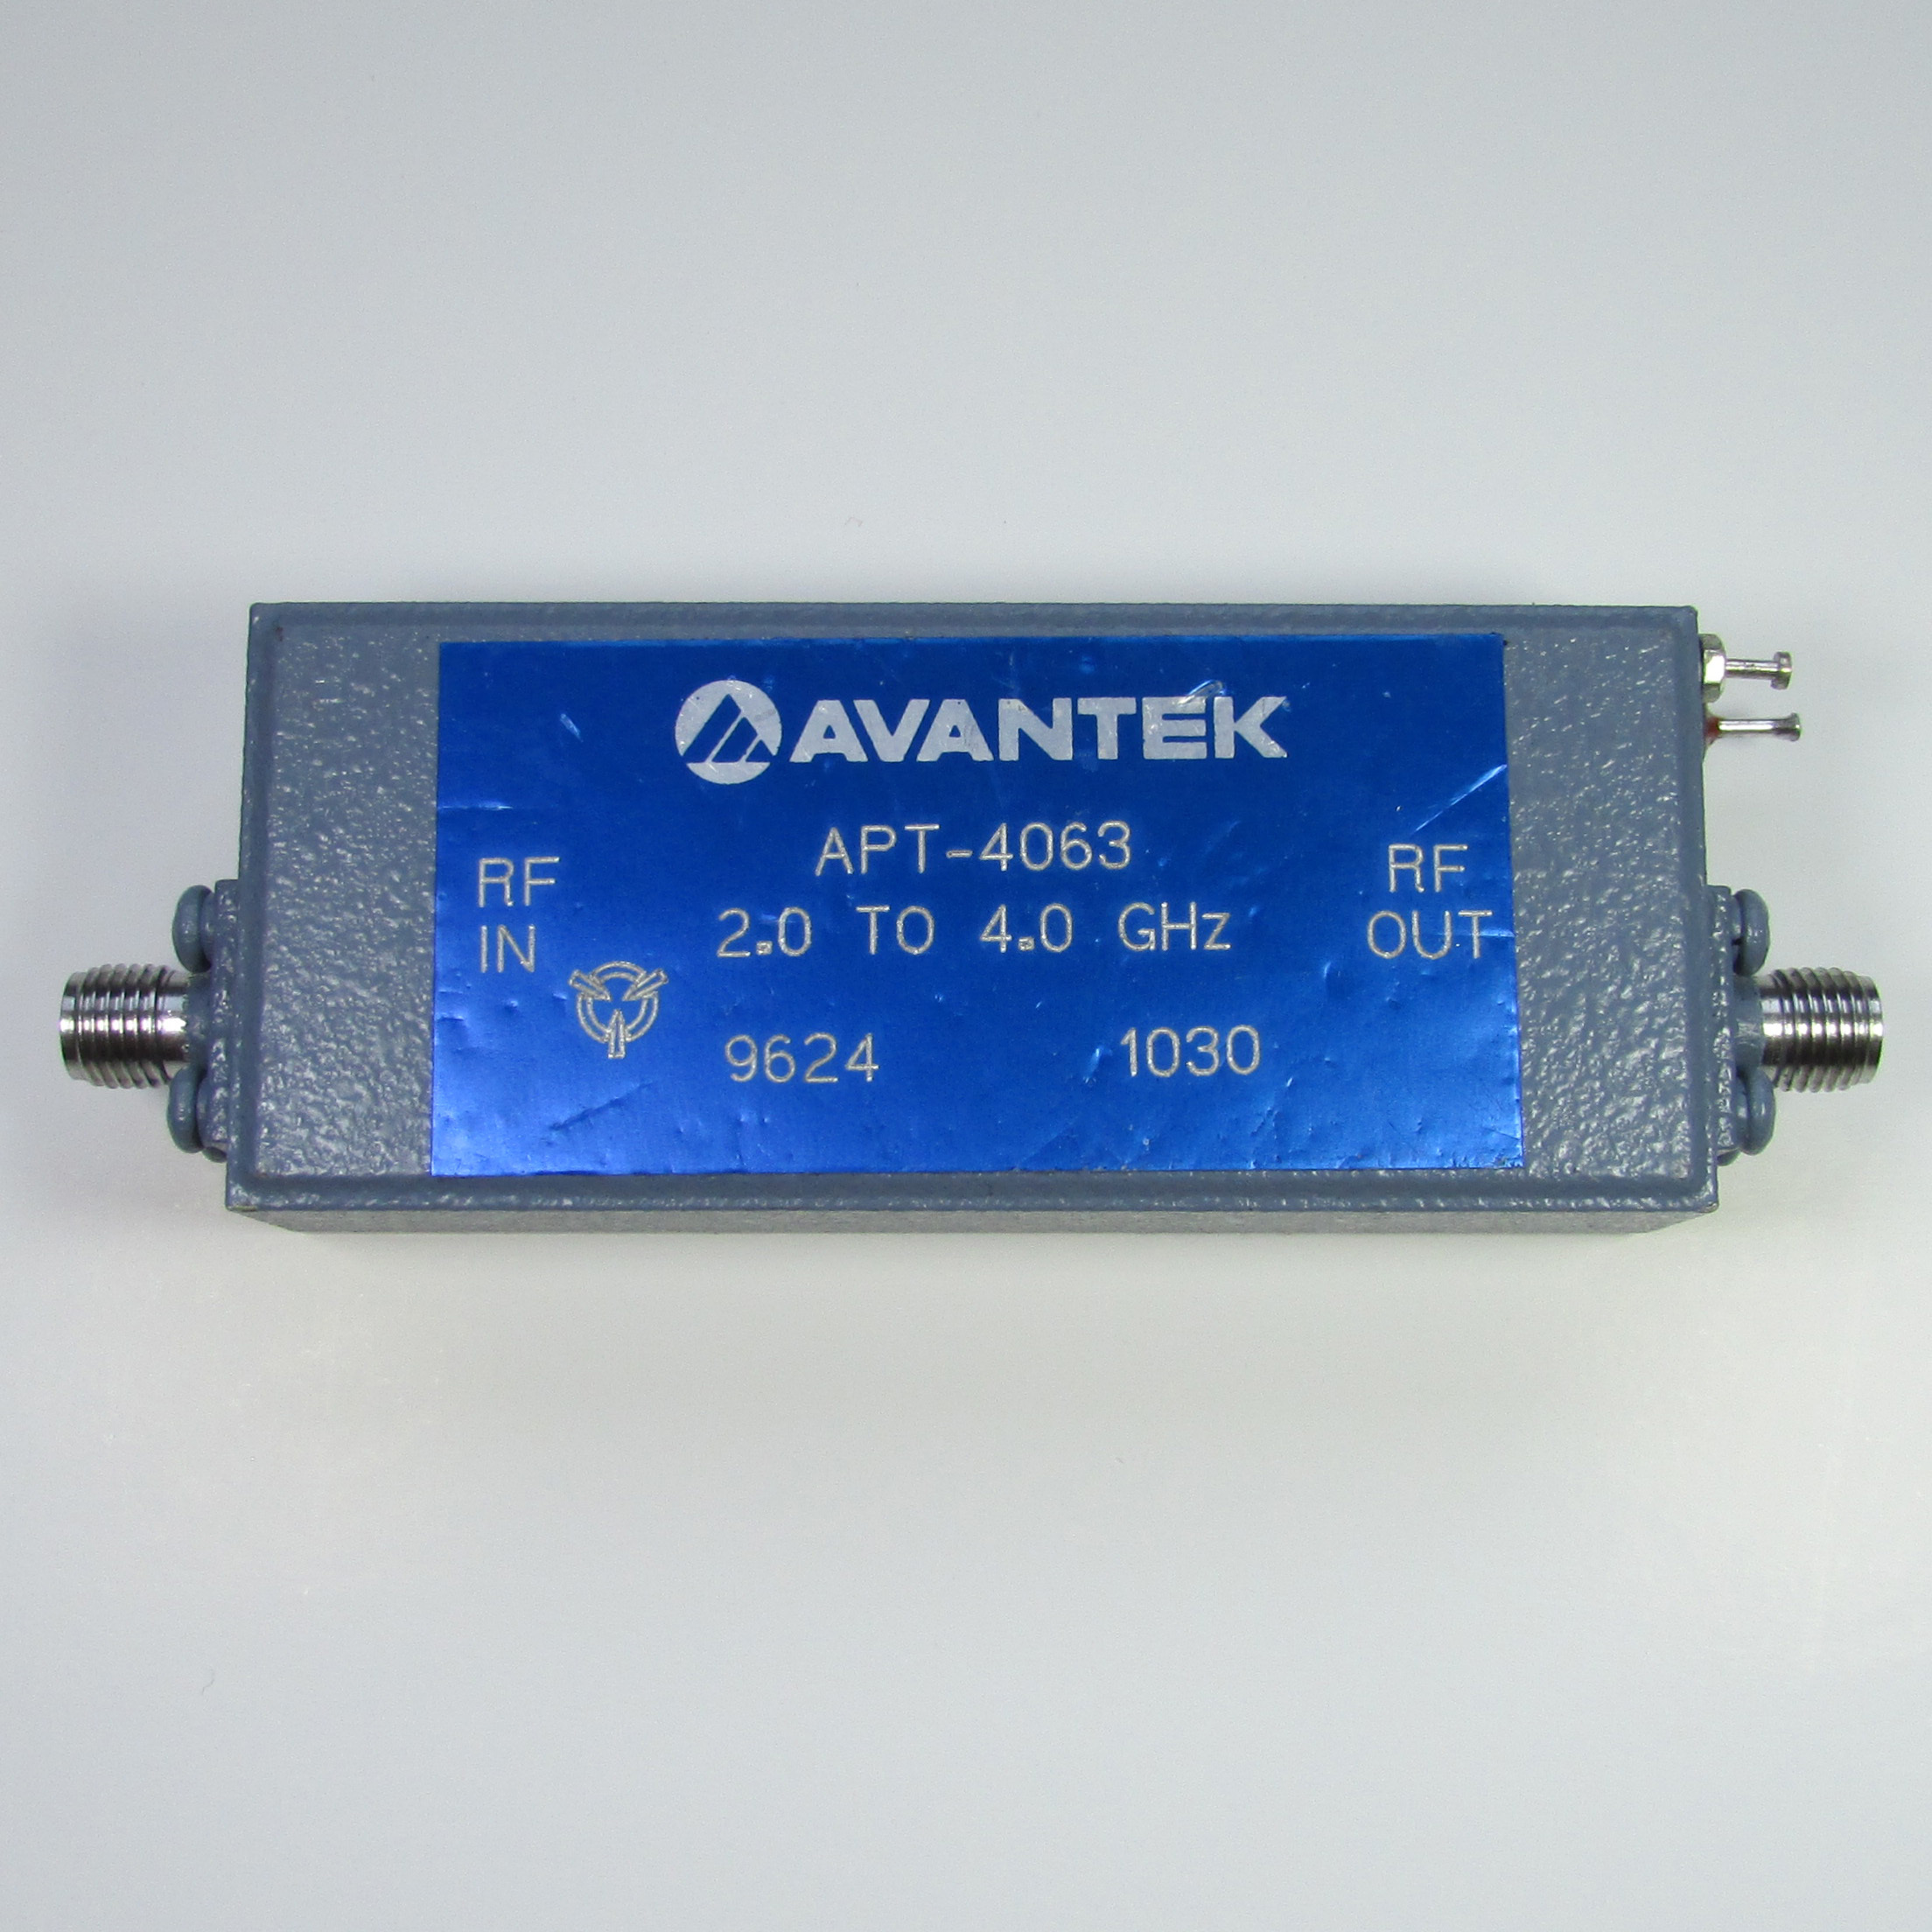 Avantek APT-4063 2-4GHz 28dB 30dBm (1W) SMA Microwave Power Amplifier